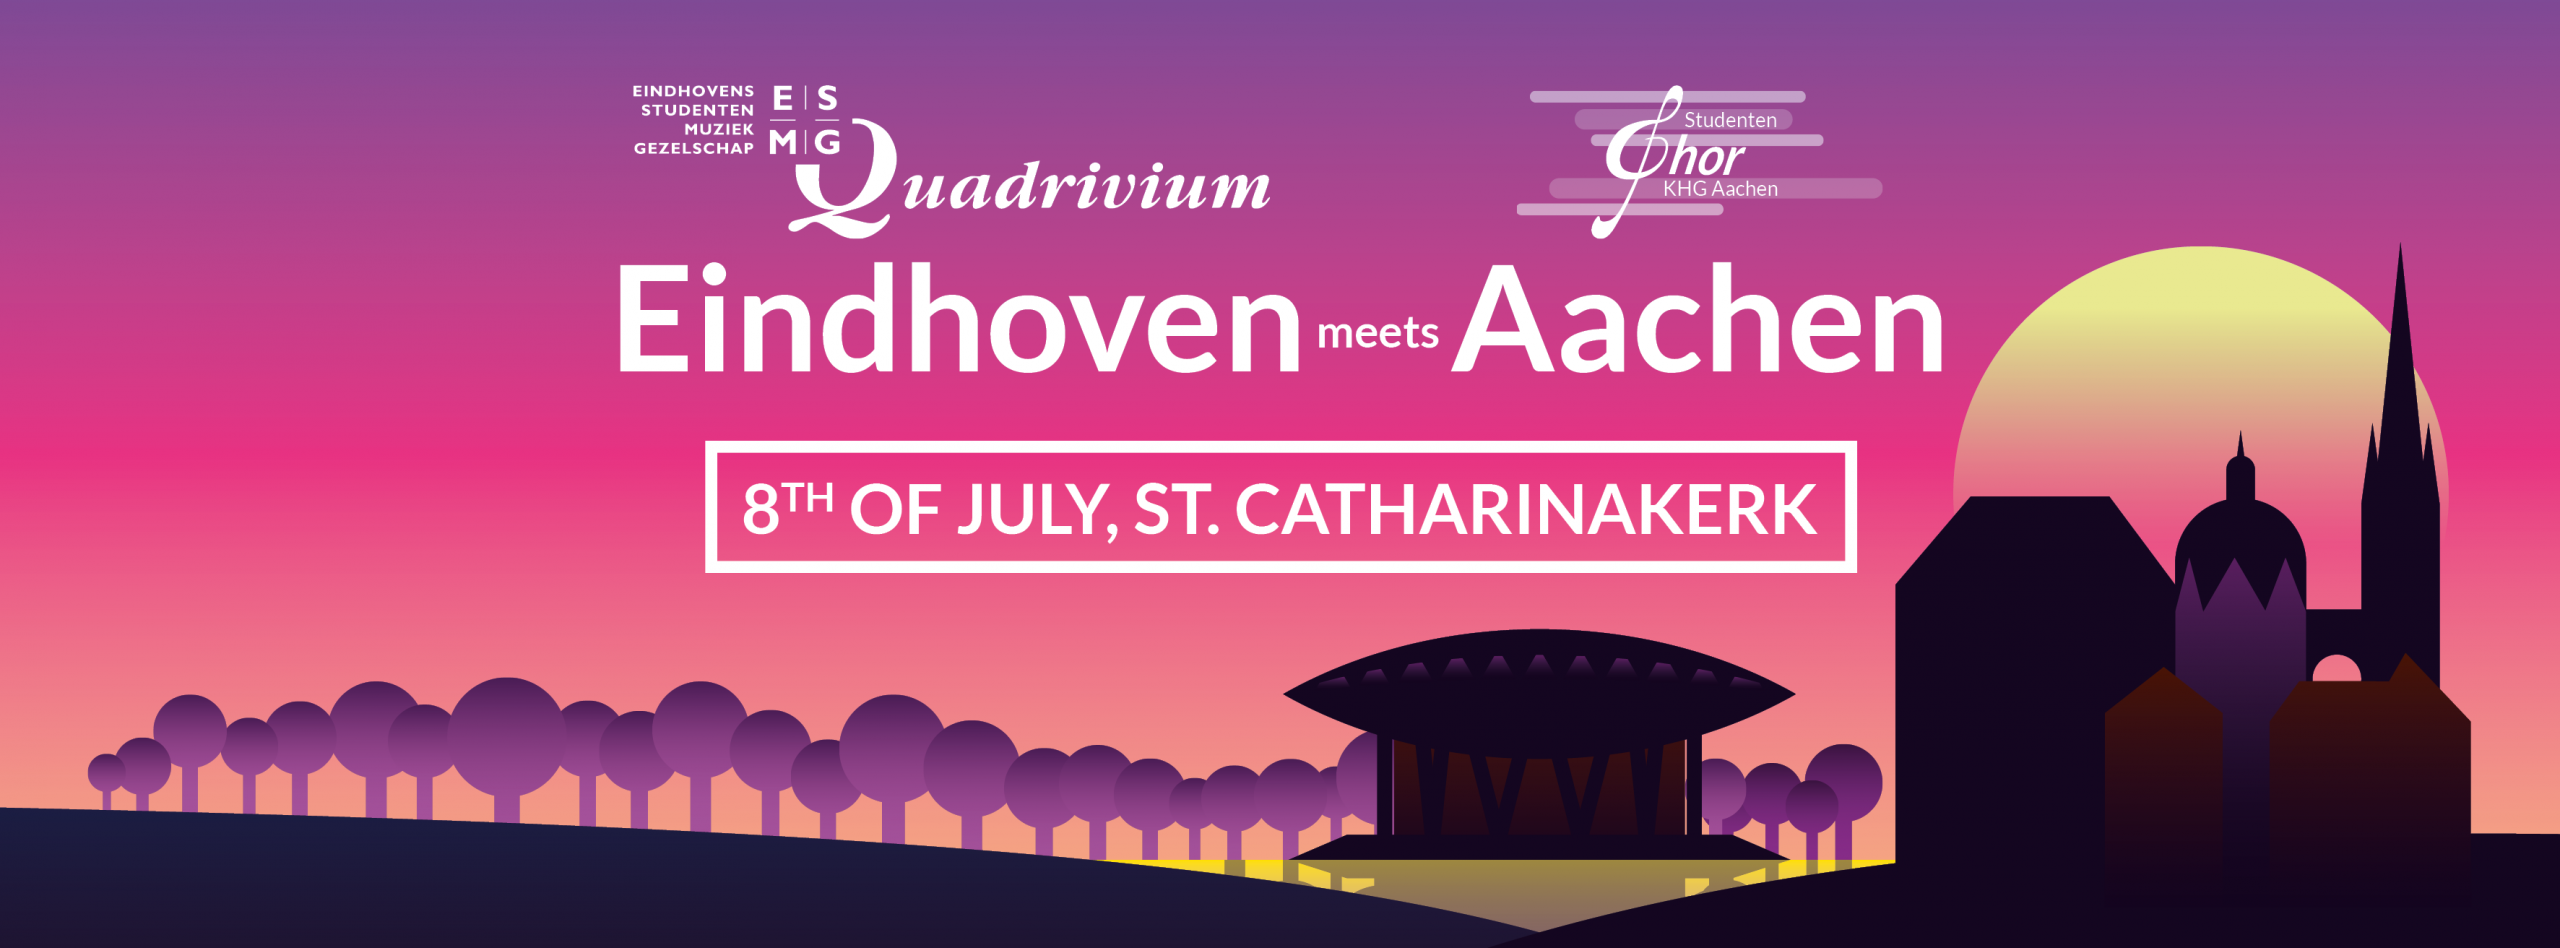 Eindhoven meets Aachen